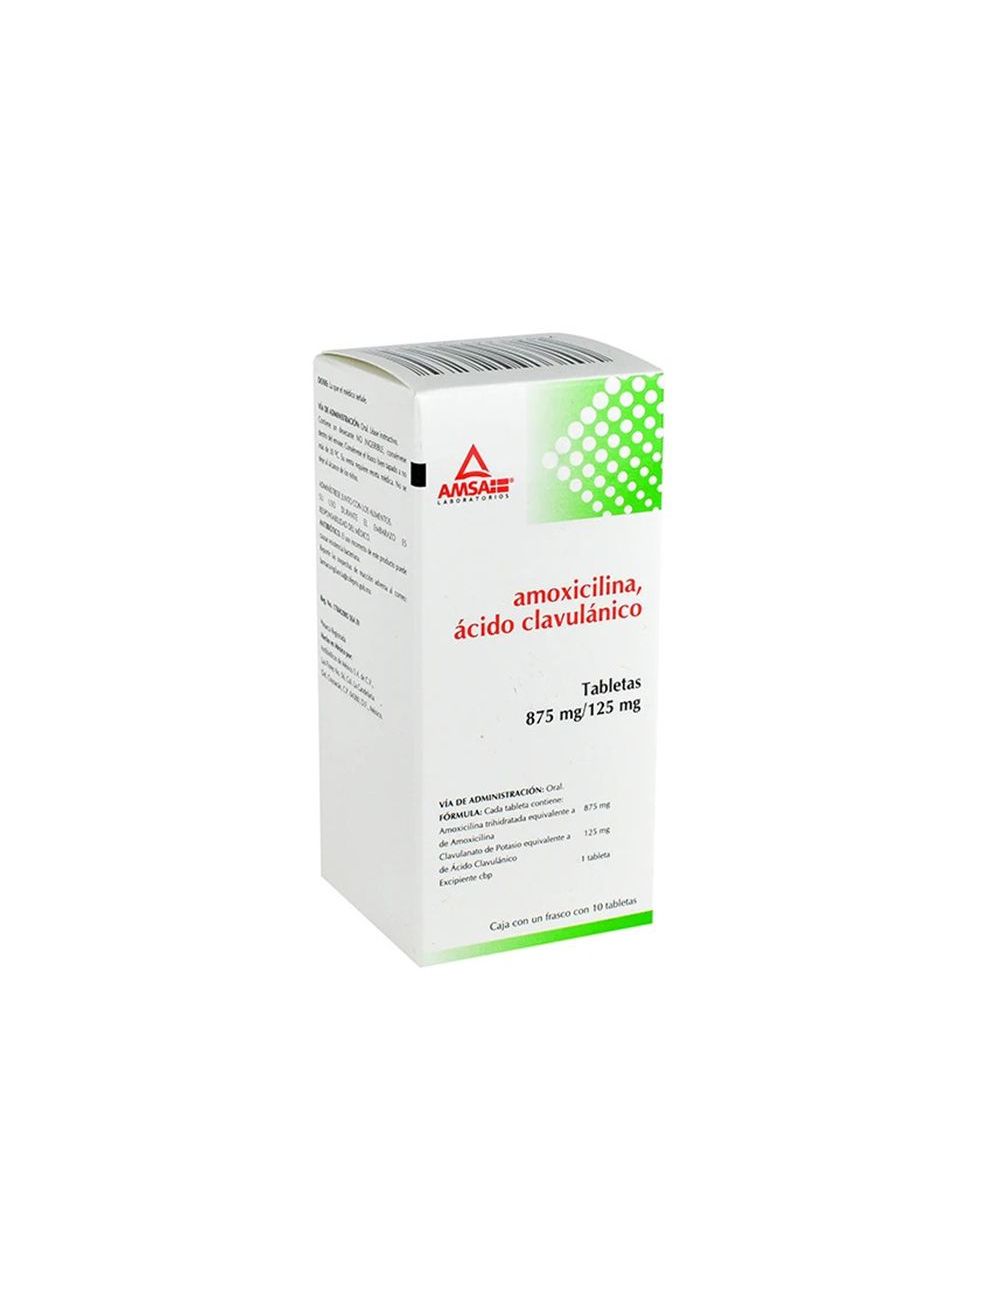 Descubrir 53+ imagen amoxicilina acido clavulanico se vende sin receta